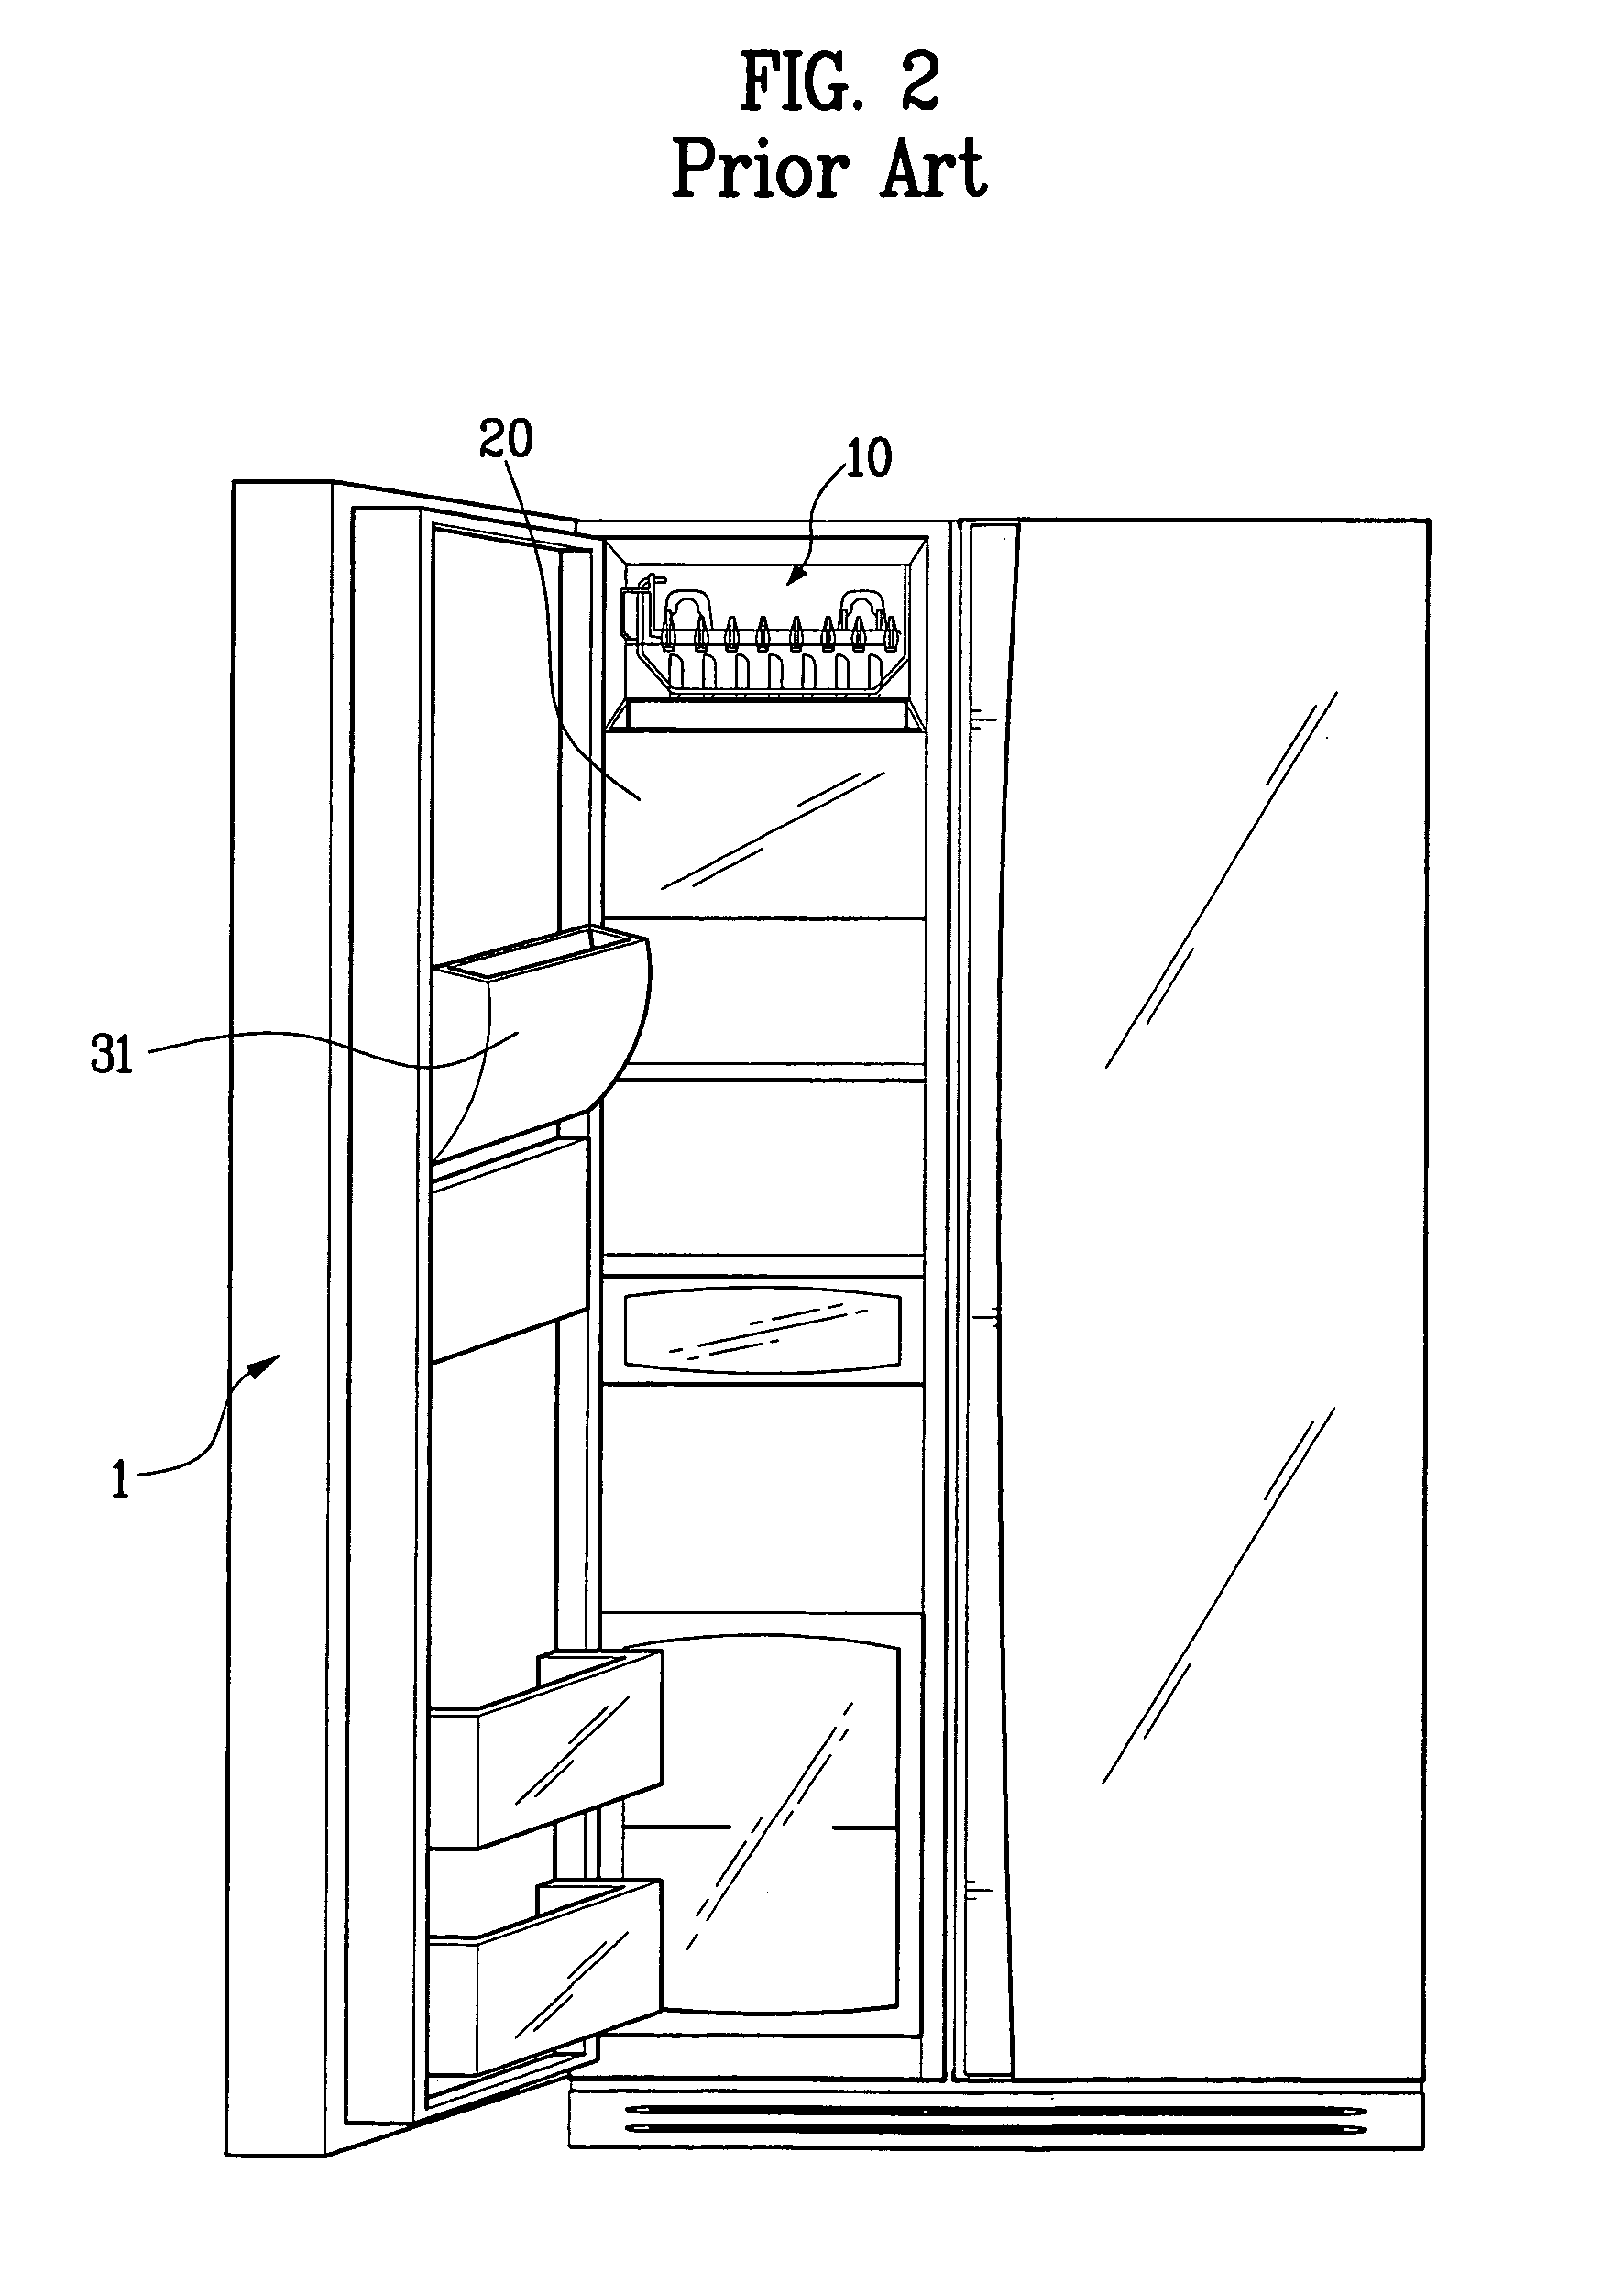 Dispenser of icemaker in refrigerator